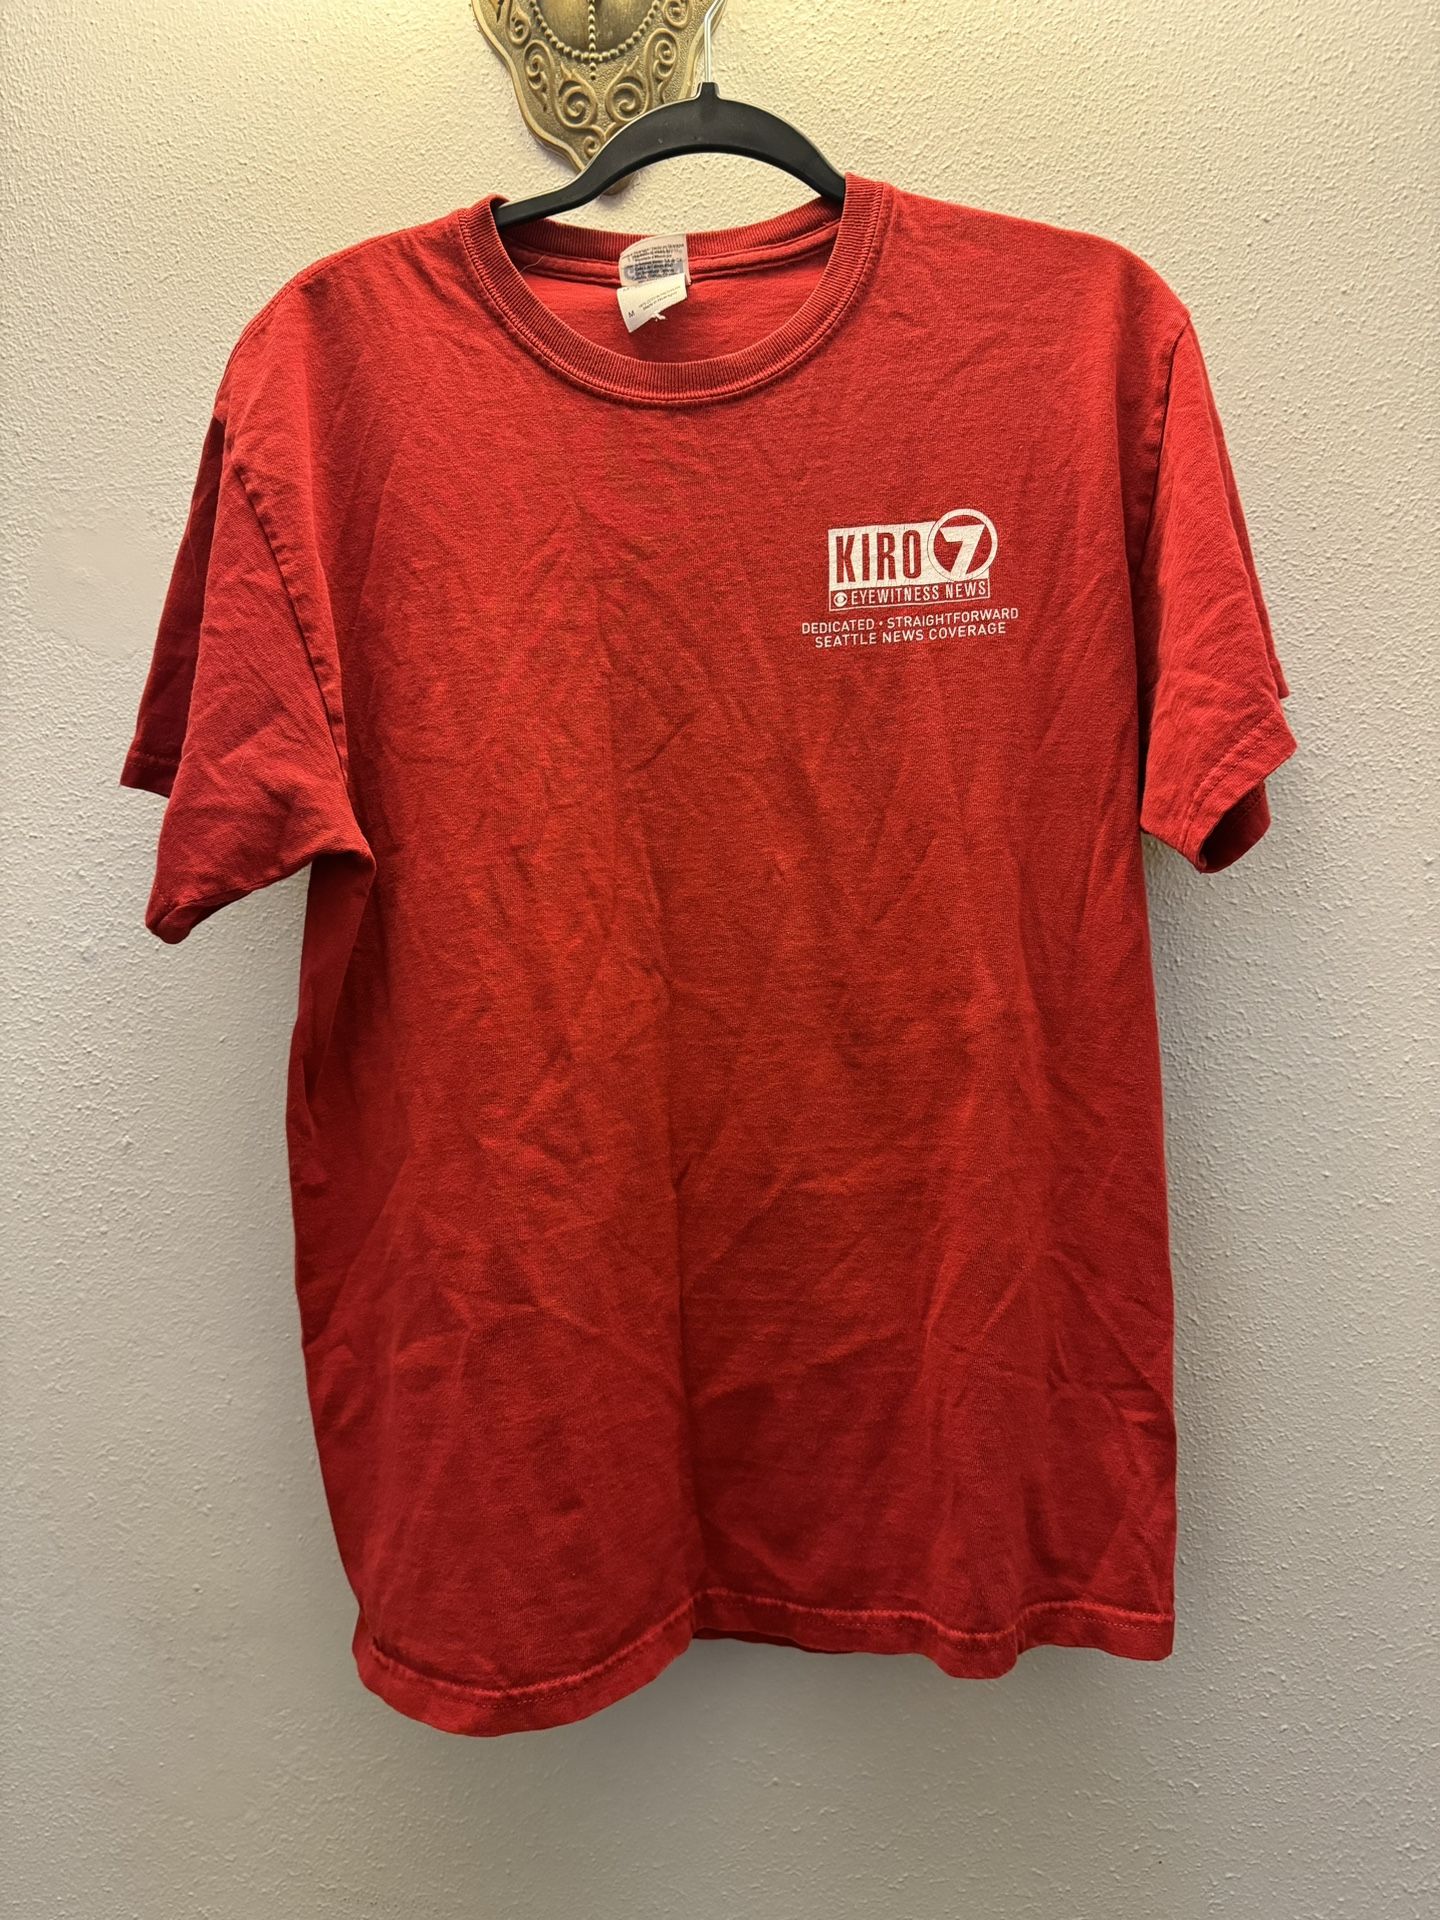 Kiro 7 Eyewitness News T Shirt Medium Red